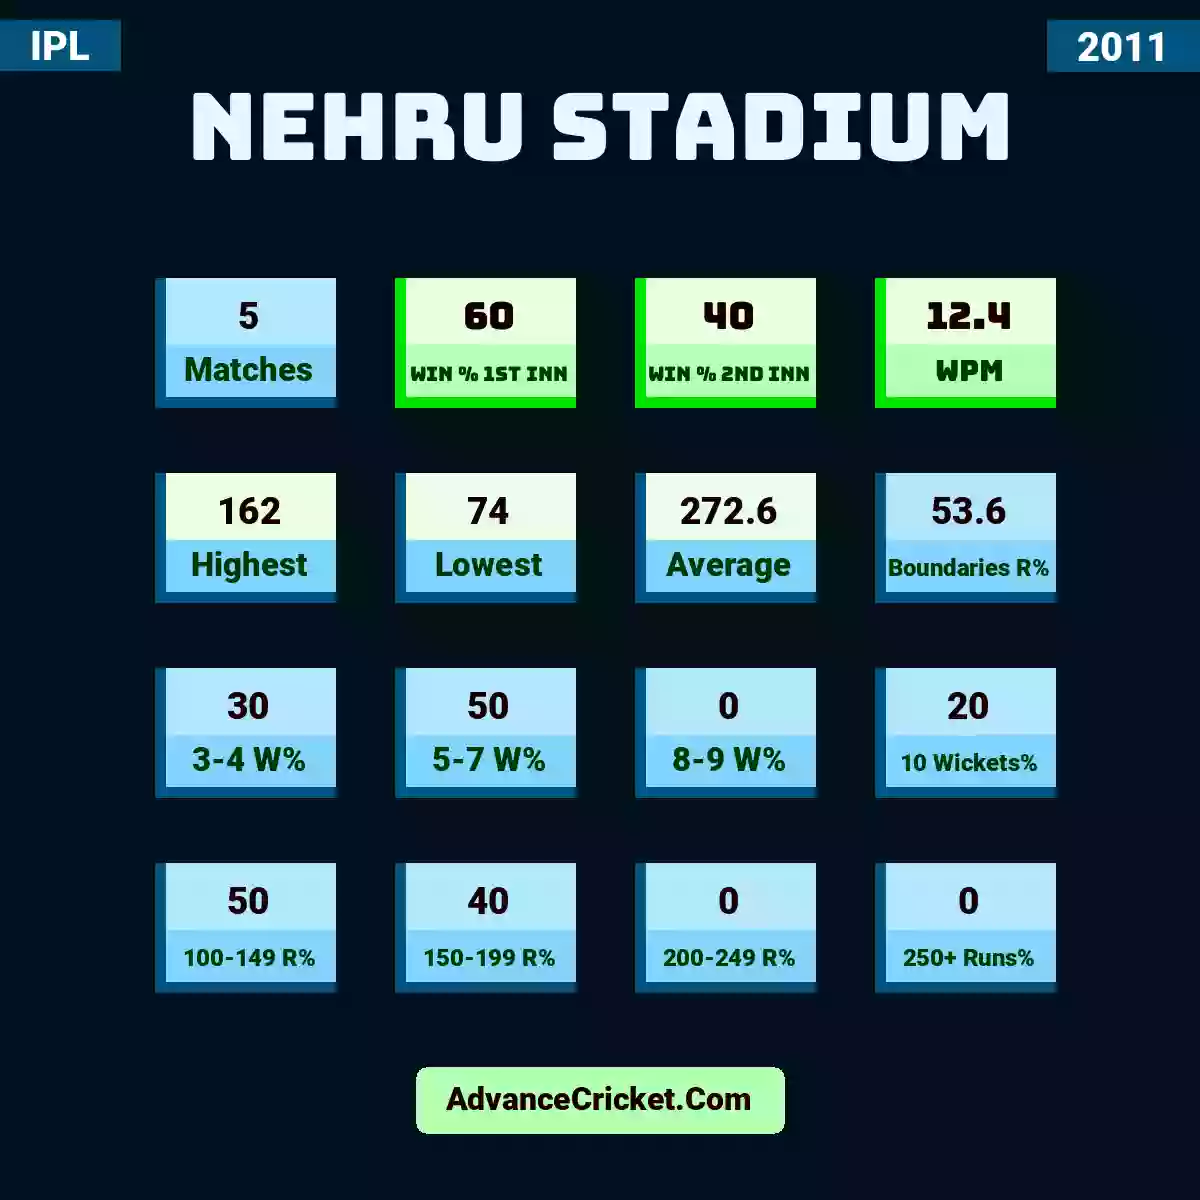 Image showing Nehru Stadium with Matches: 5, Win % 1st Inn: 60, Win % 2nd Inn: 40, WPM: 12.4, Highest: 162, Lowest: 74, Average: 272.6, Boundaries R%: 53.6, 3-4 W%: 30, 5-7 W%: 50, 8-9 W%: 0, 10 Wickets%: 20, 100-149 R%: 50, 150-199 R%: 40, 200-249 R%: 0, 250+ Runs%: 0.